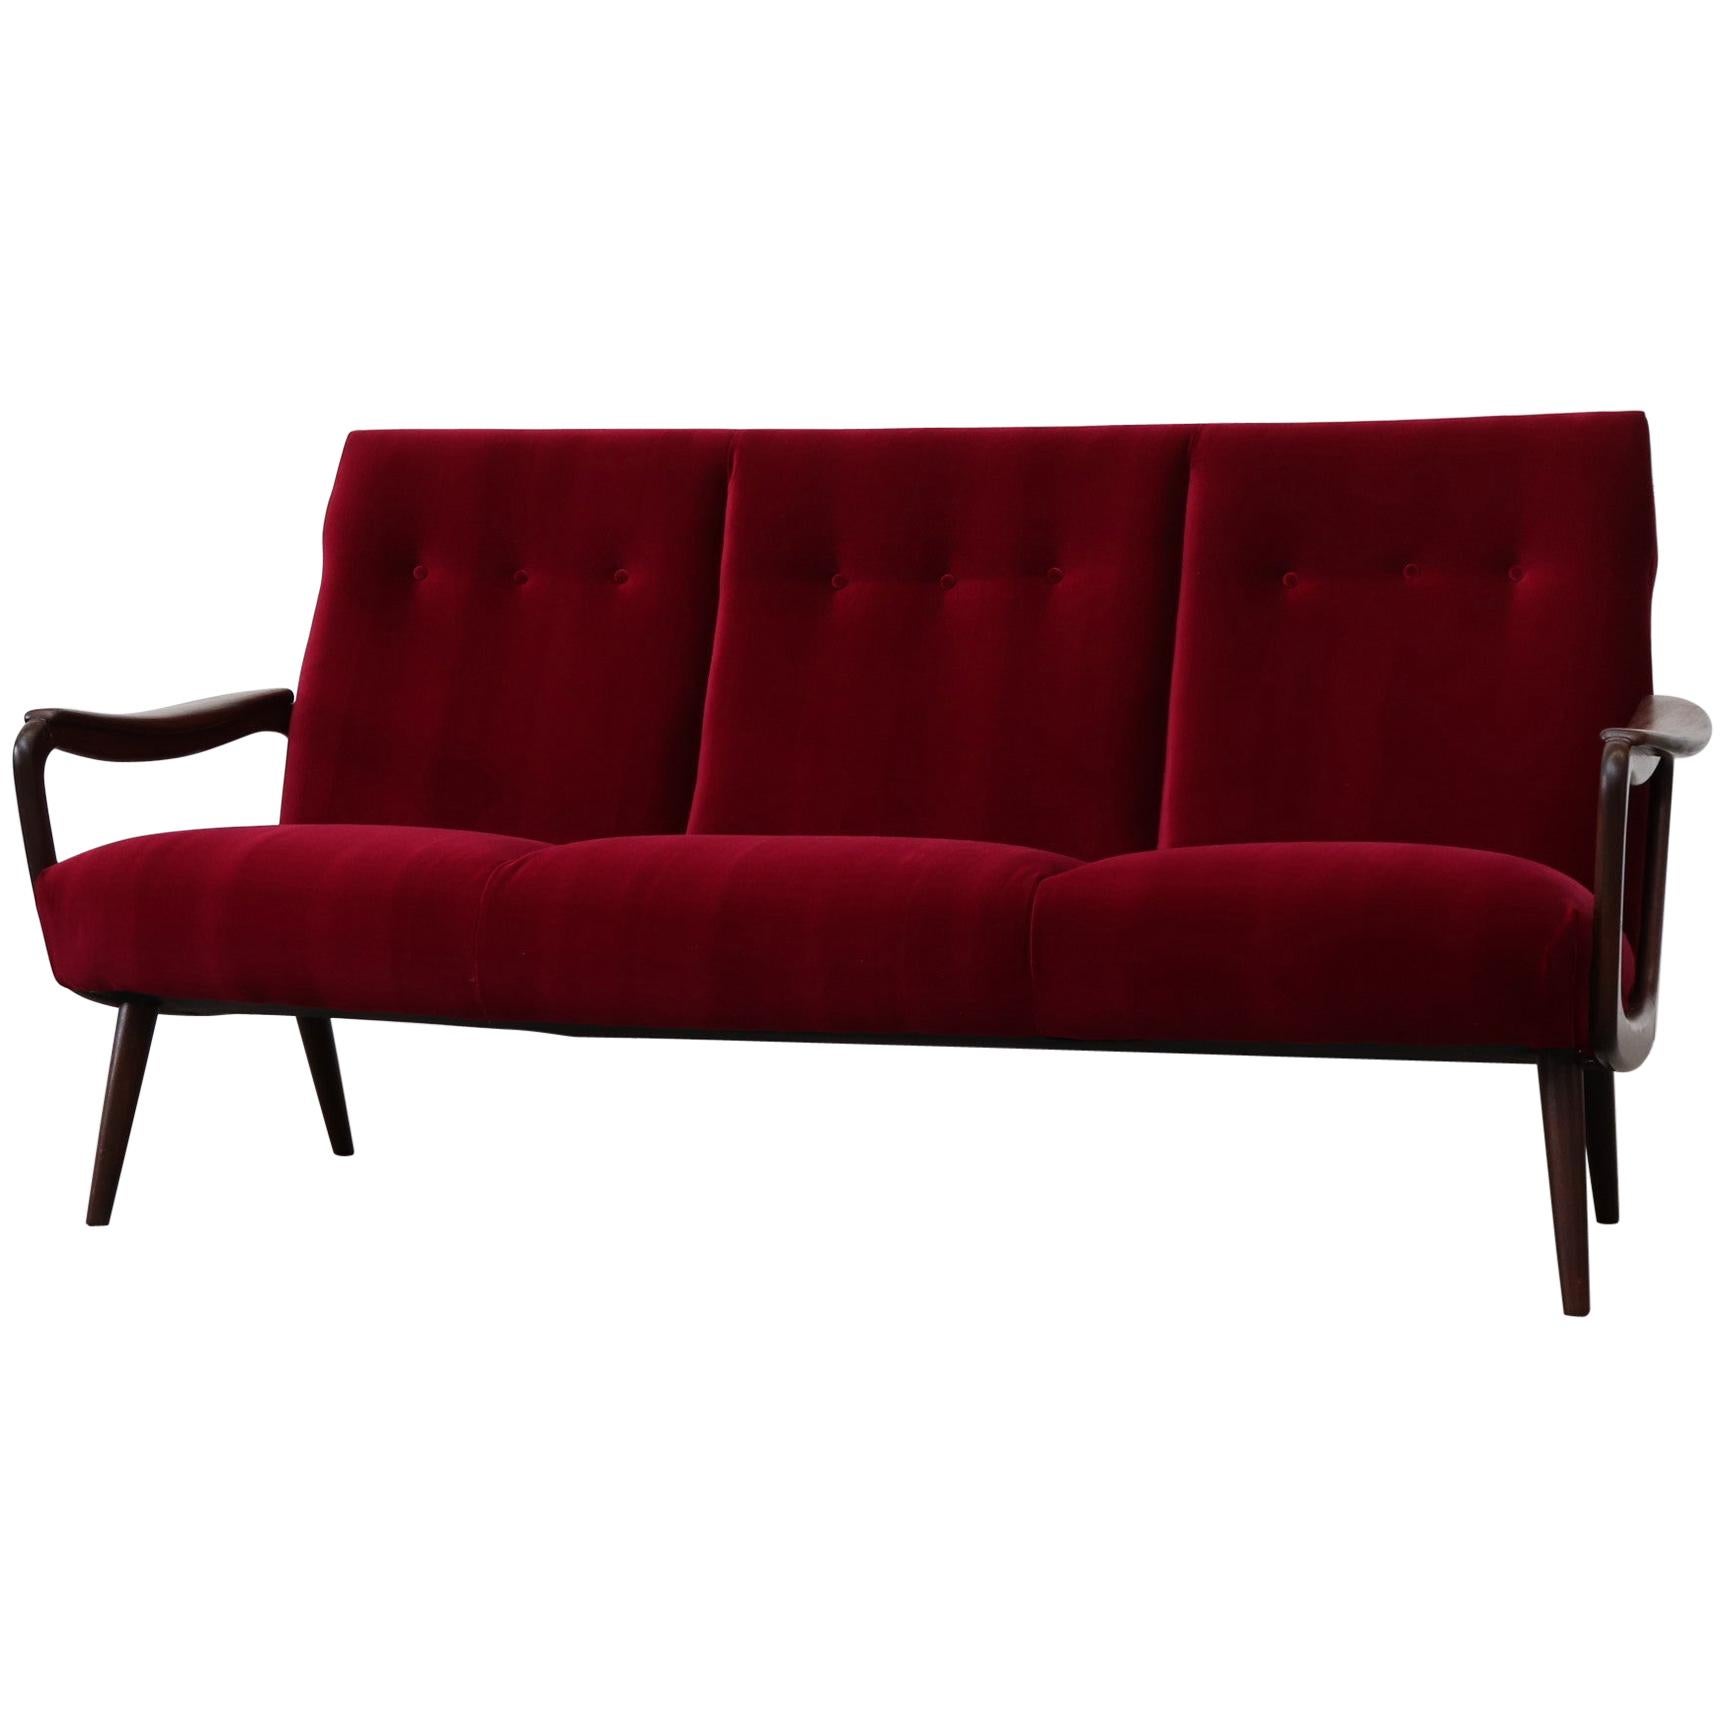 Mid-Century  Bovenkamp Style Sofa in Garnet Velvet with Organic Dark Wood Arms